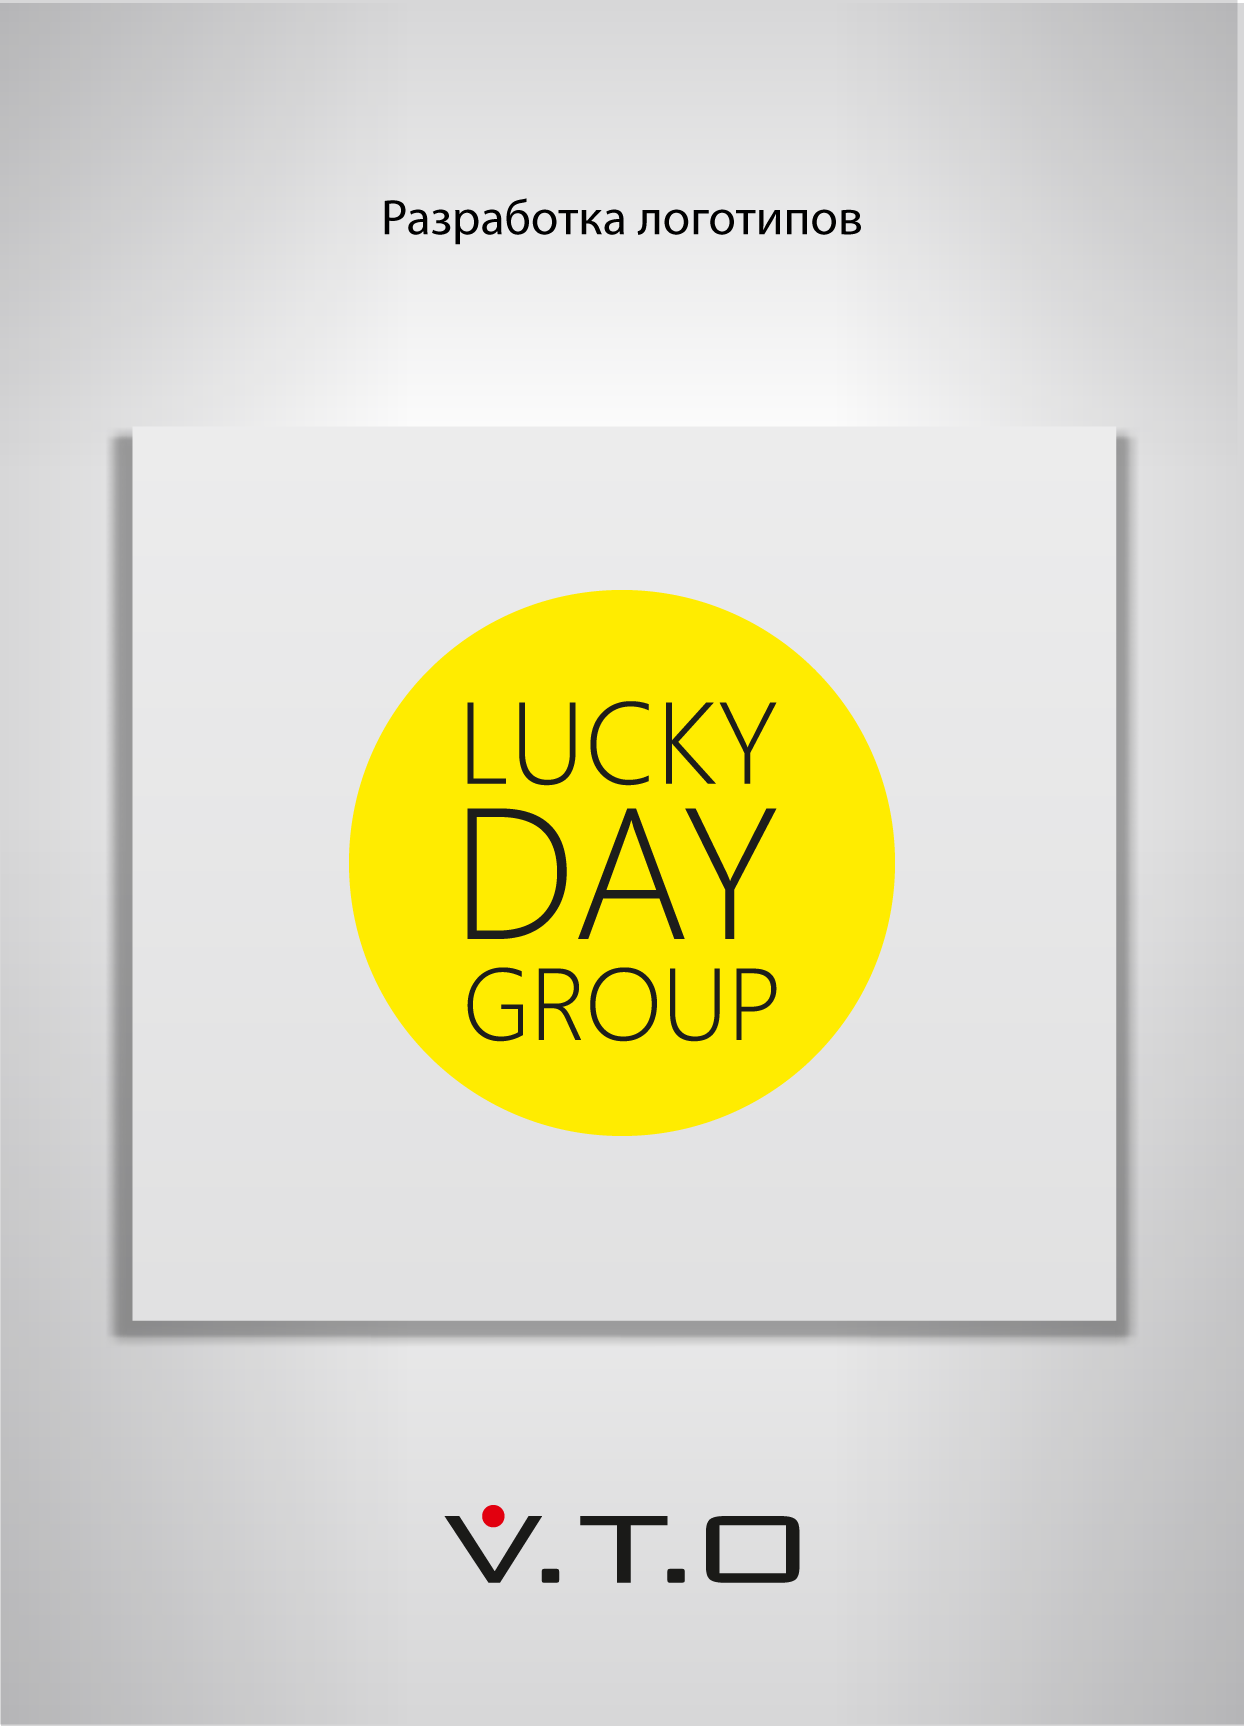 Lucky day group, логотип, разработка логотипа алматы, дизайн логотипа алматы